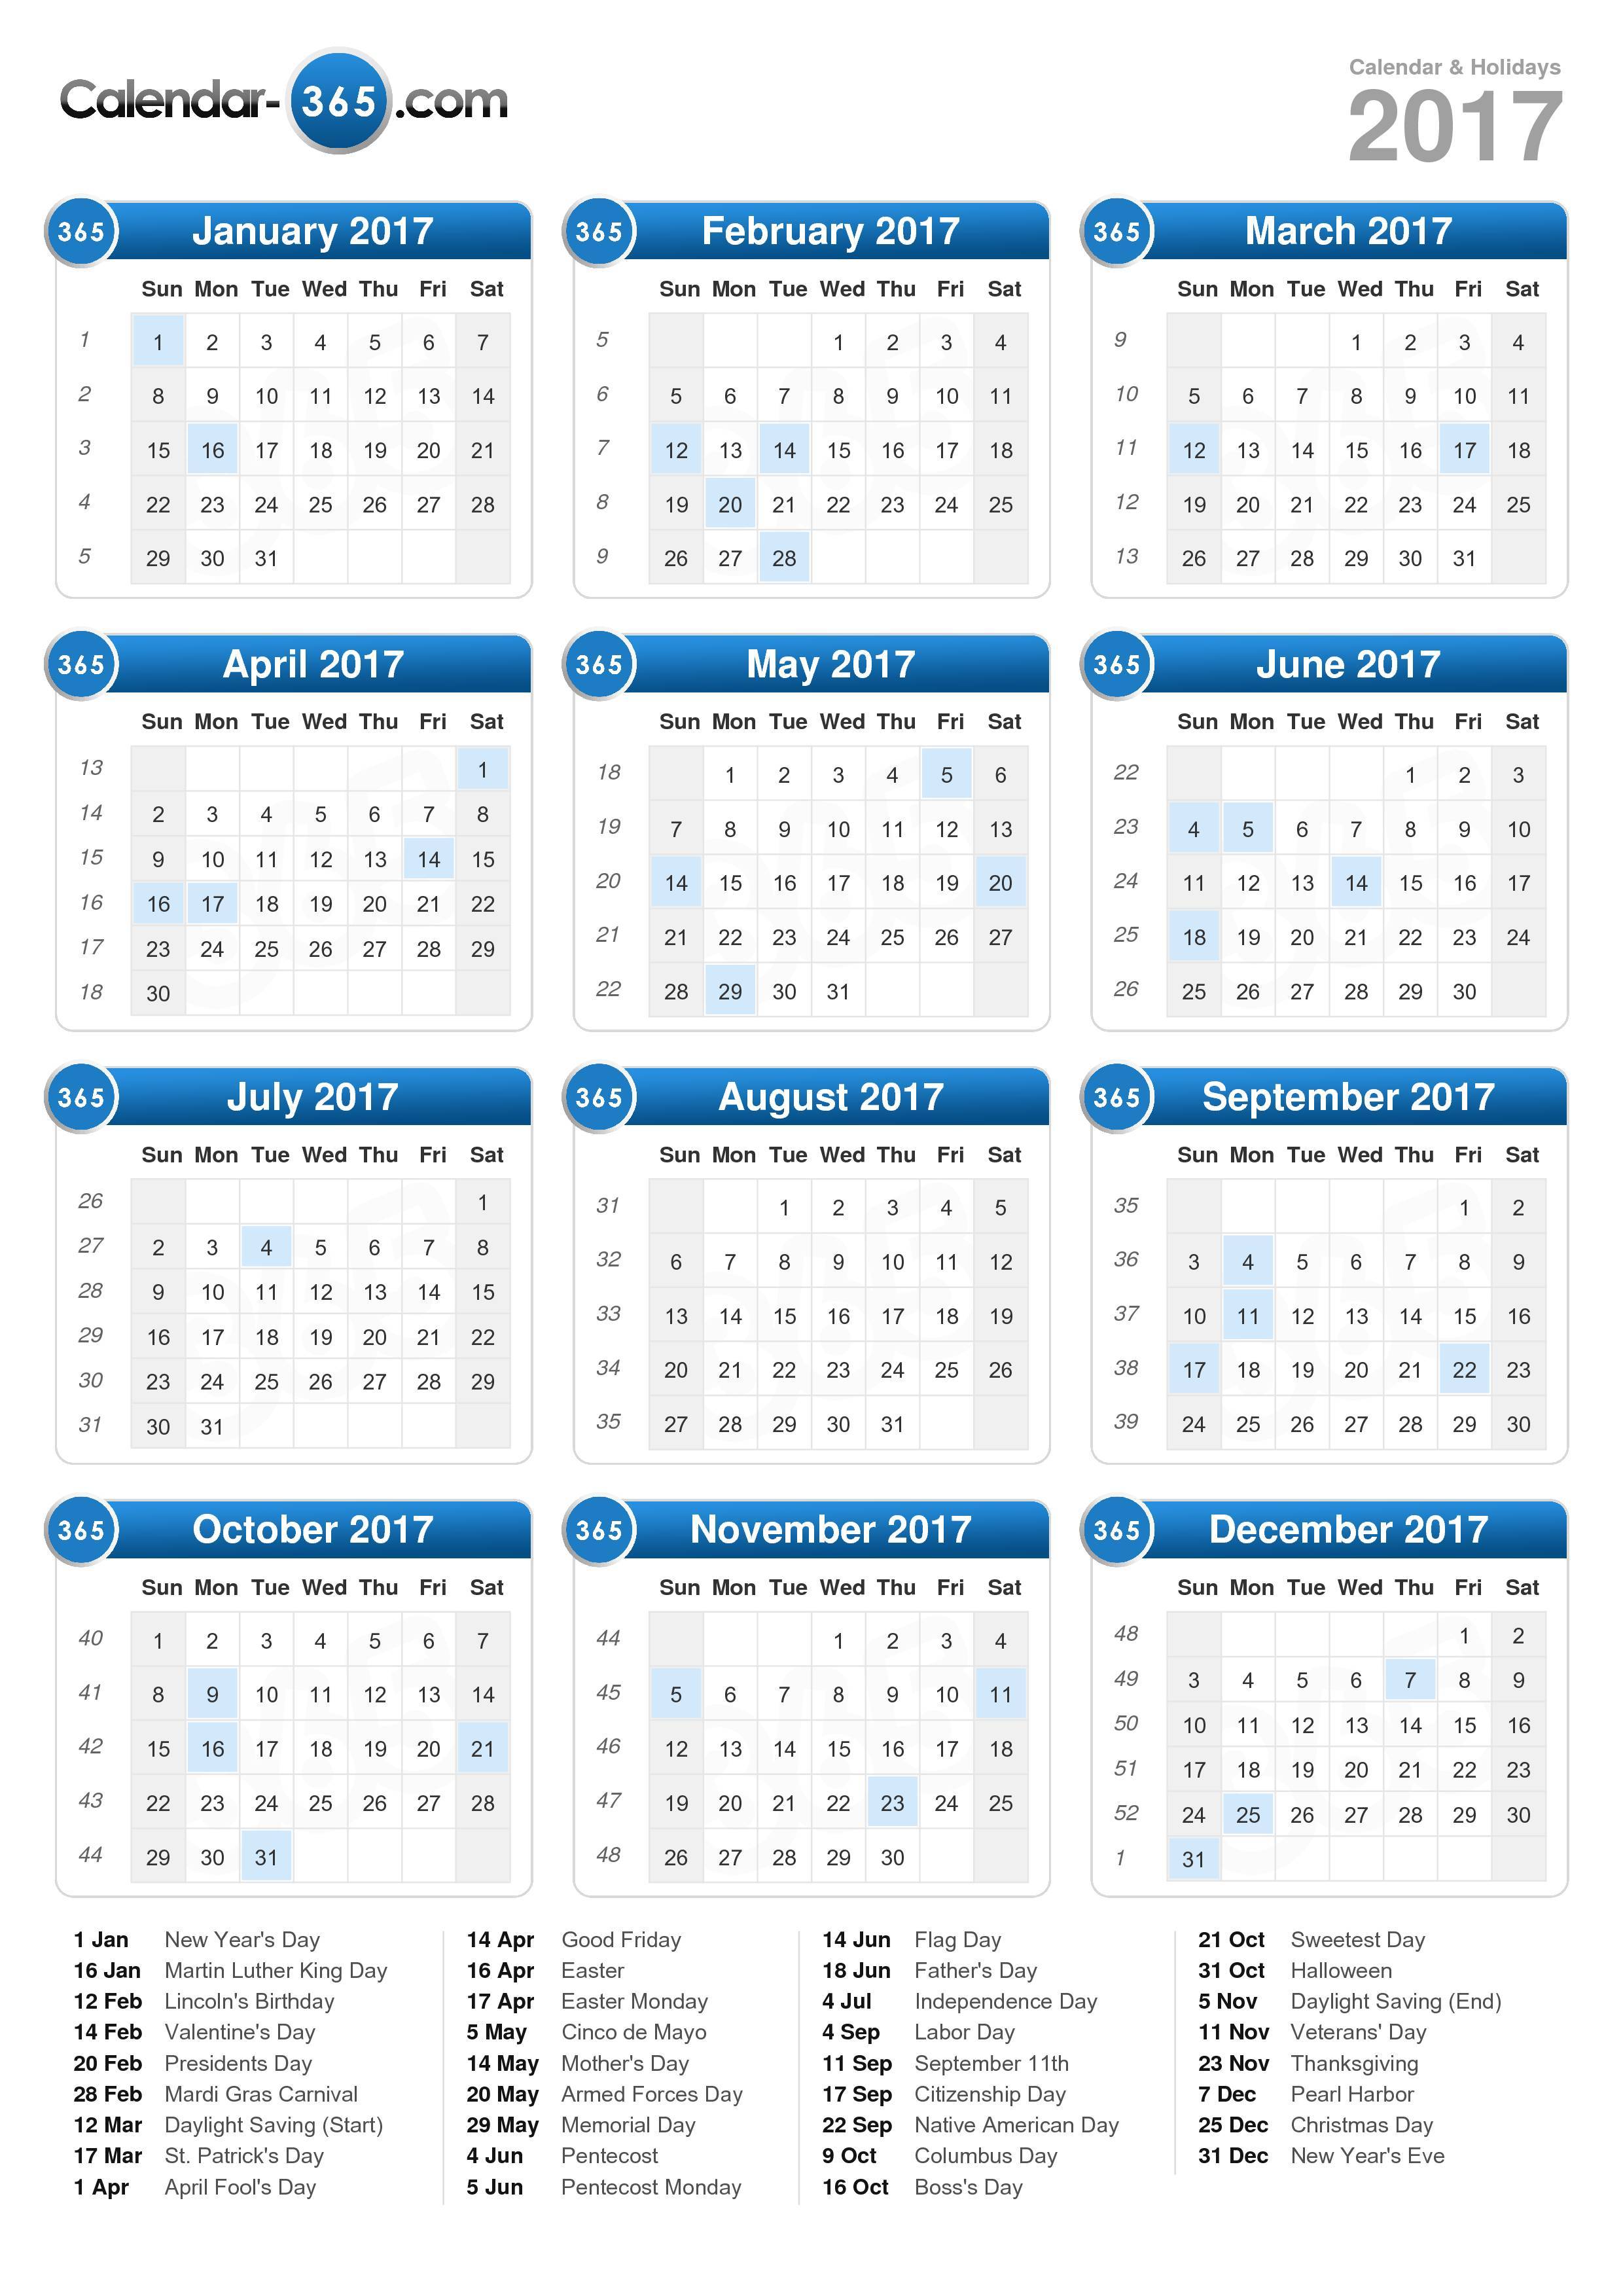 July 2017 Calendar Canada | monthly calendar printable